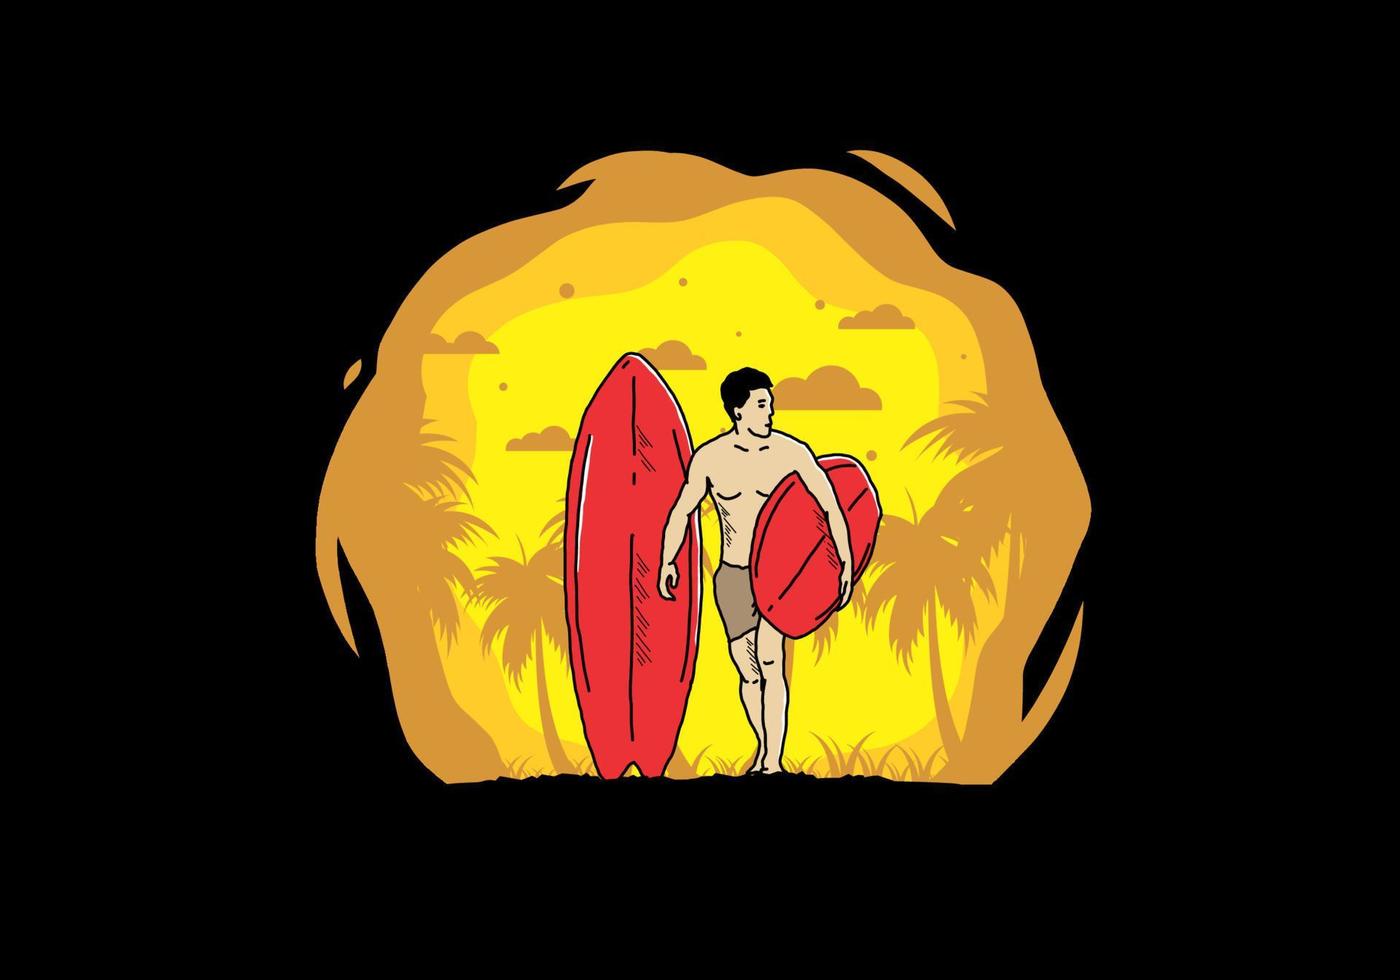 der hemdlose mann, der surfbrettillustration hält vektor